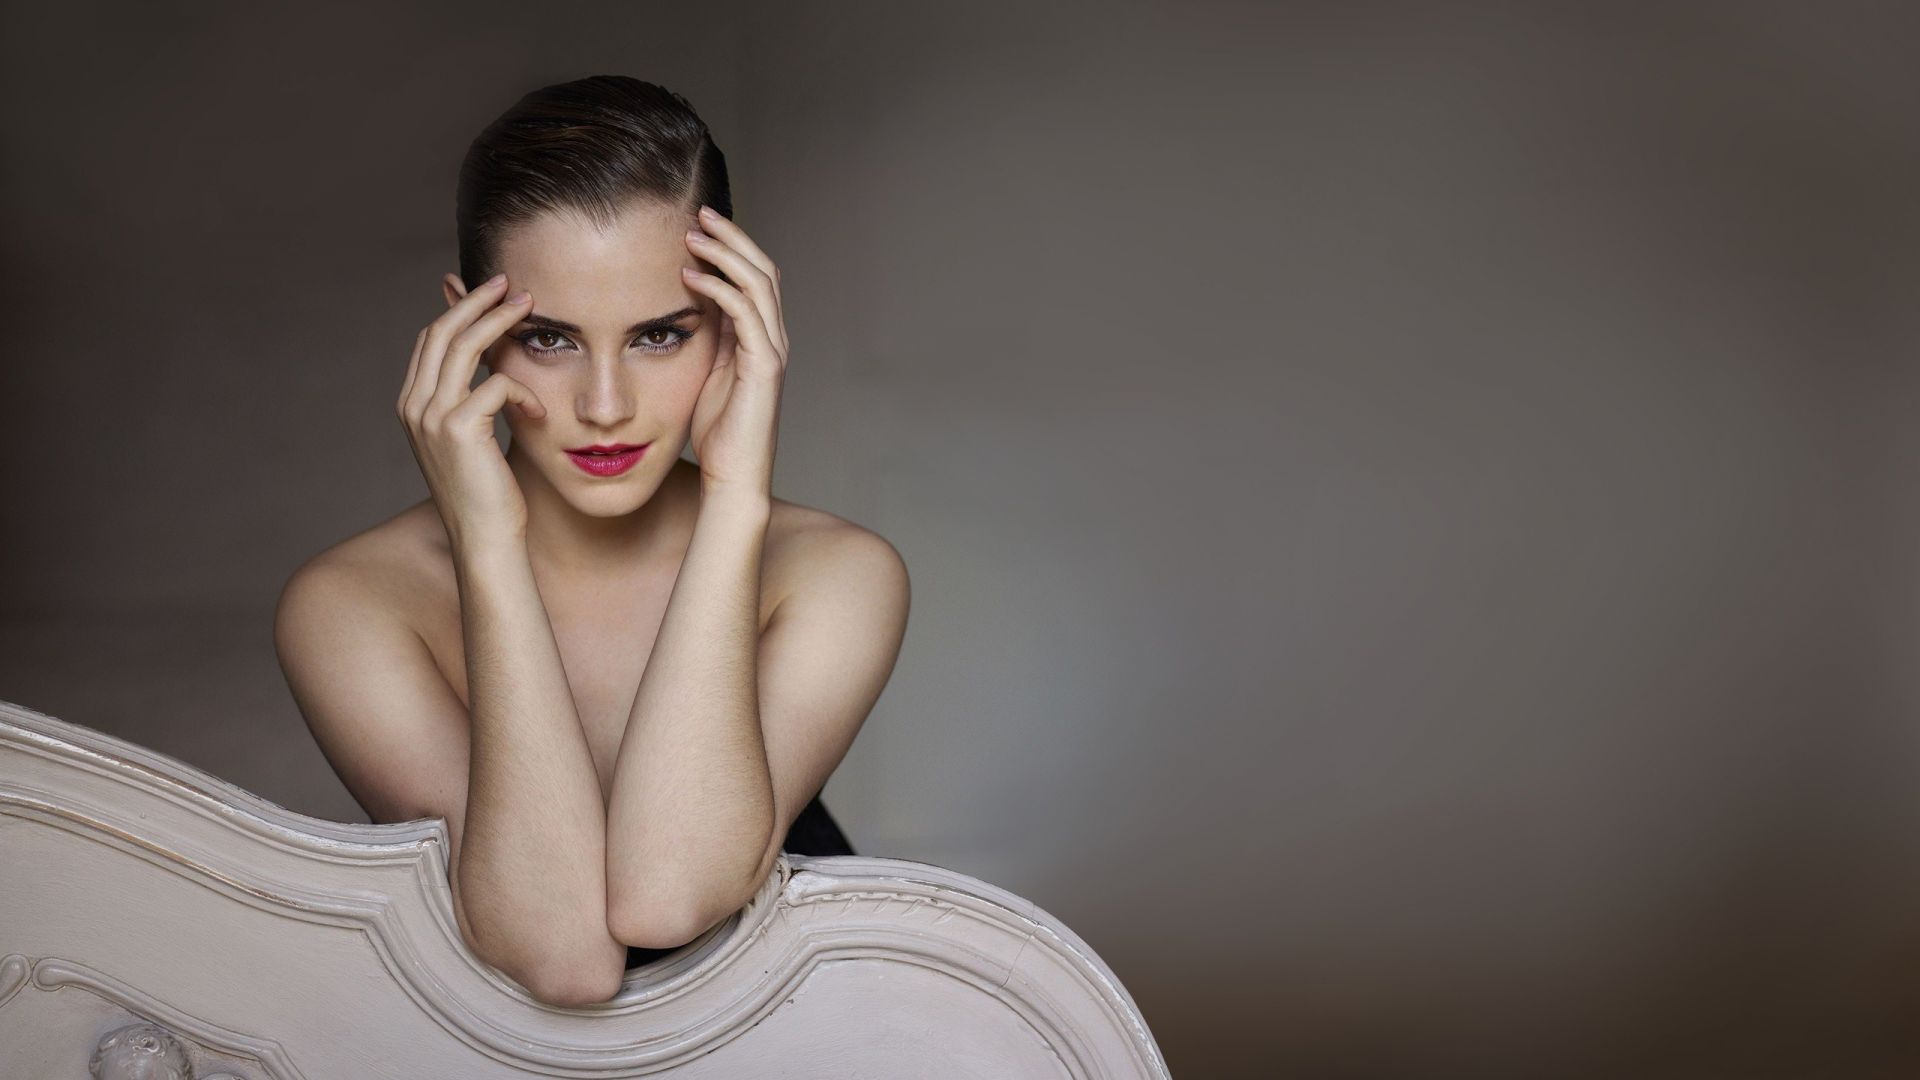 Wallpaper Emma Watson, beautiful English celebrity, hands on face